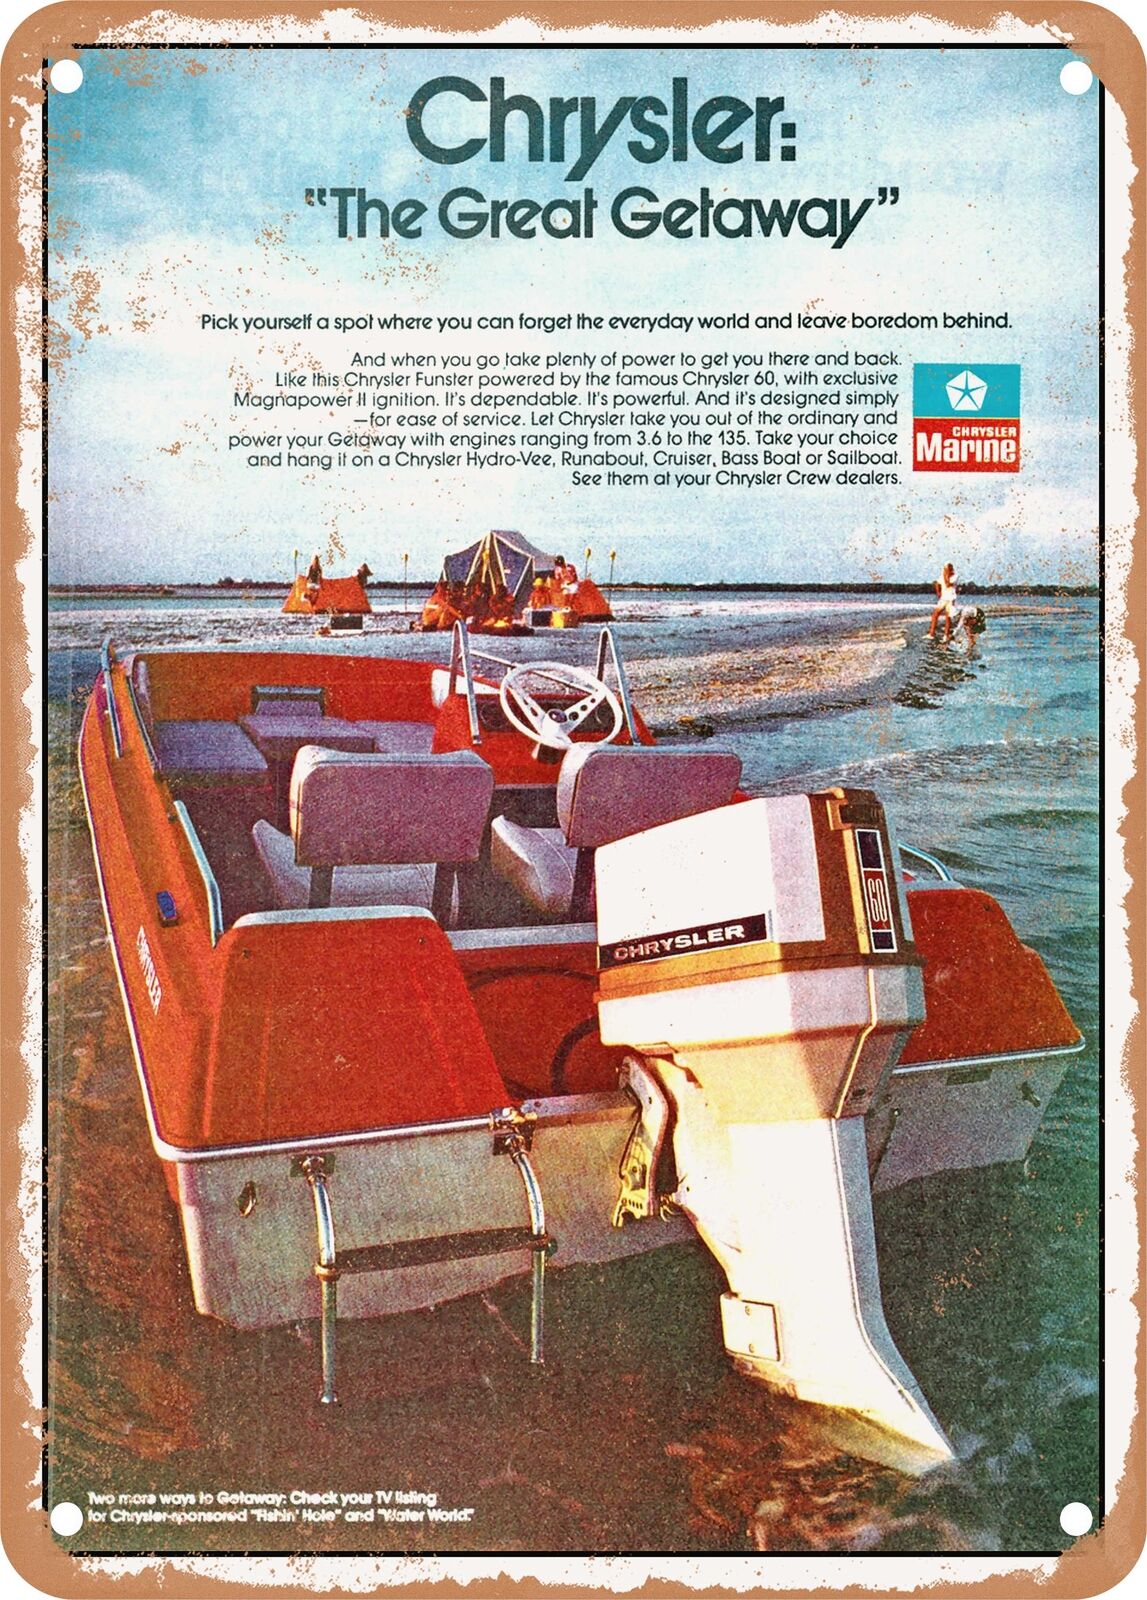 METAL SIGN - 1975 Chrysler The Great Getaway Chrysler Marine Vintage Ad